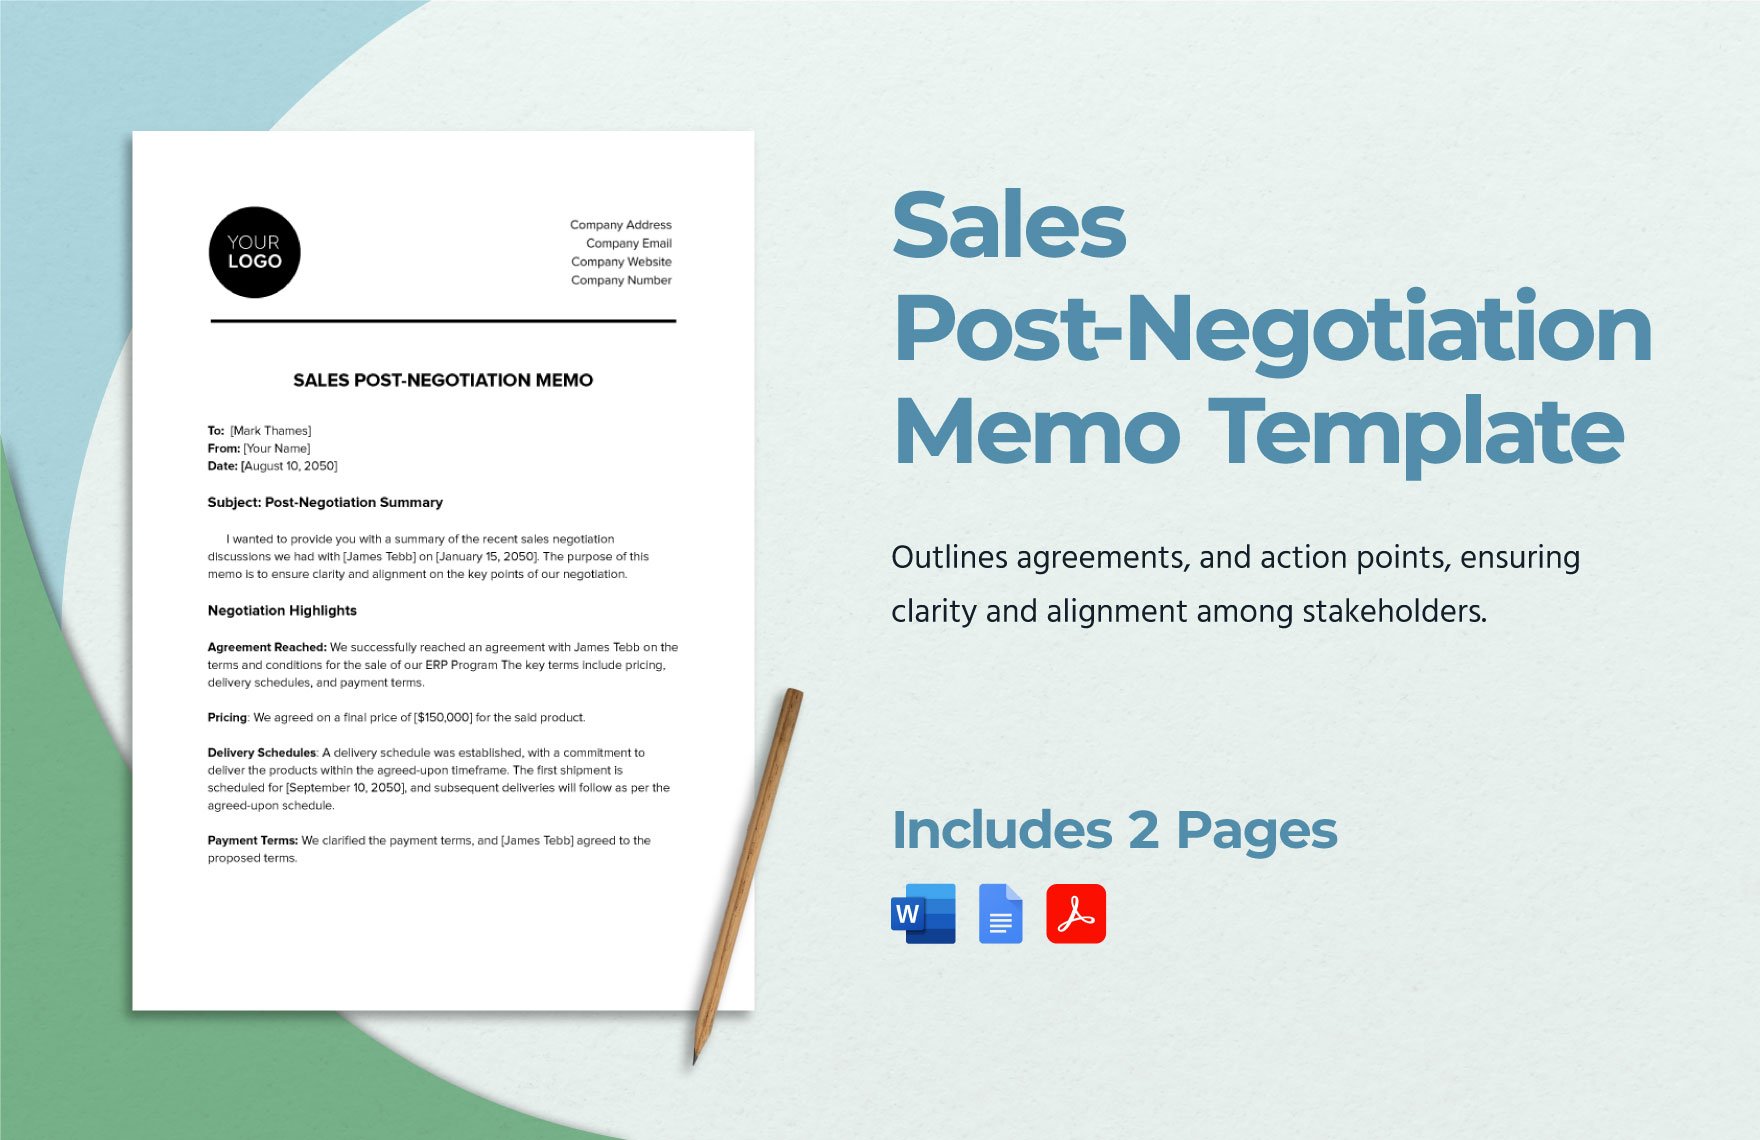 Sales Post-Negotiation Memo Template